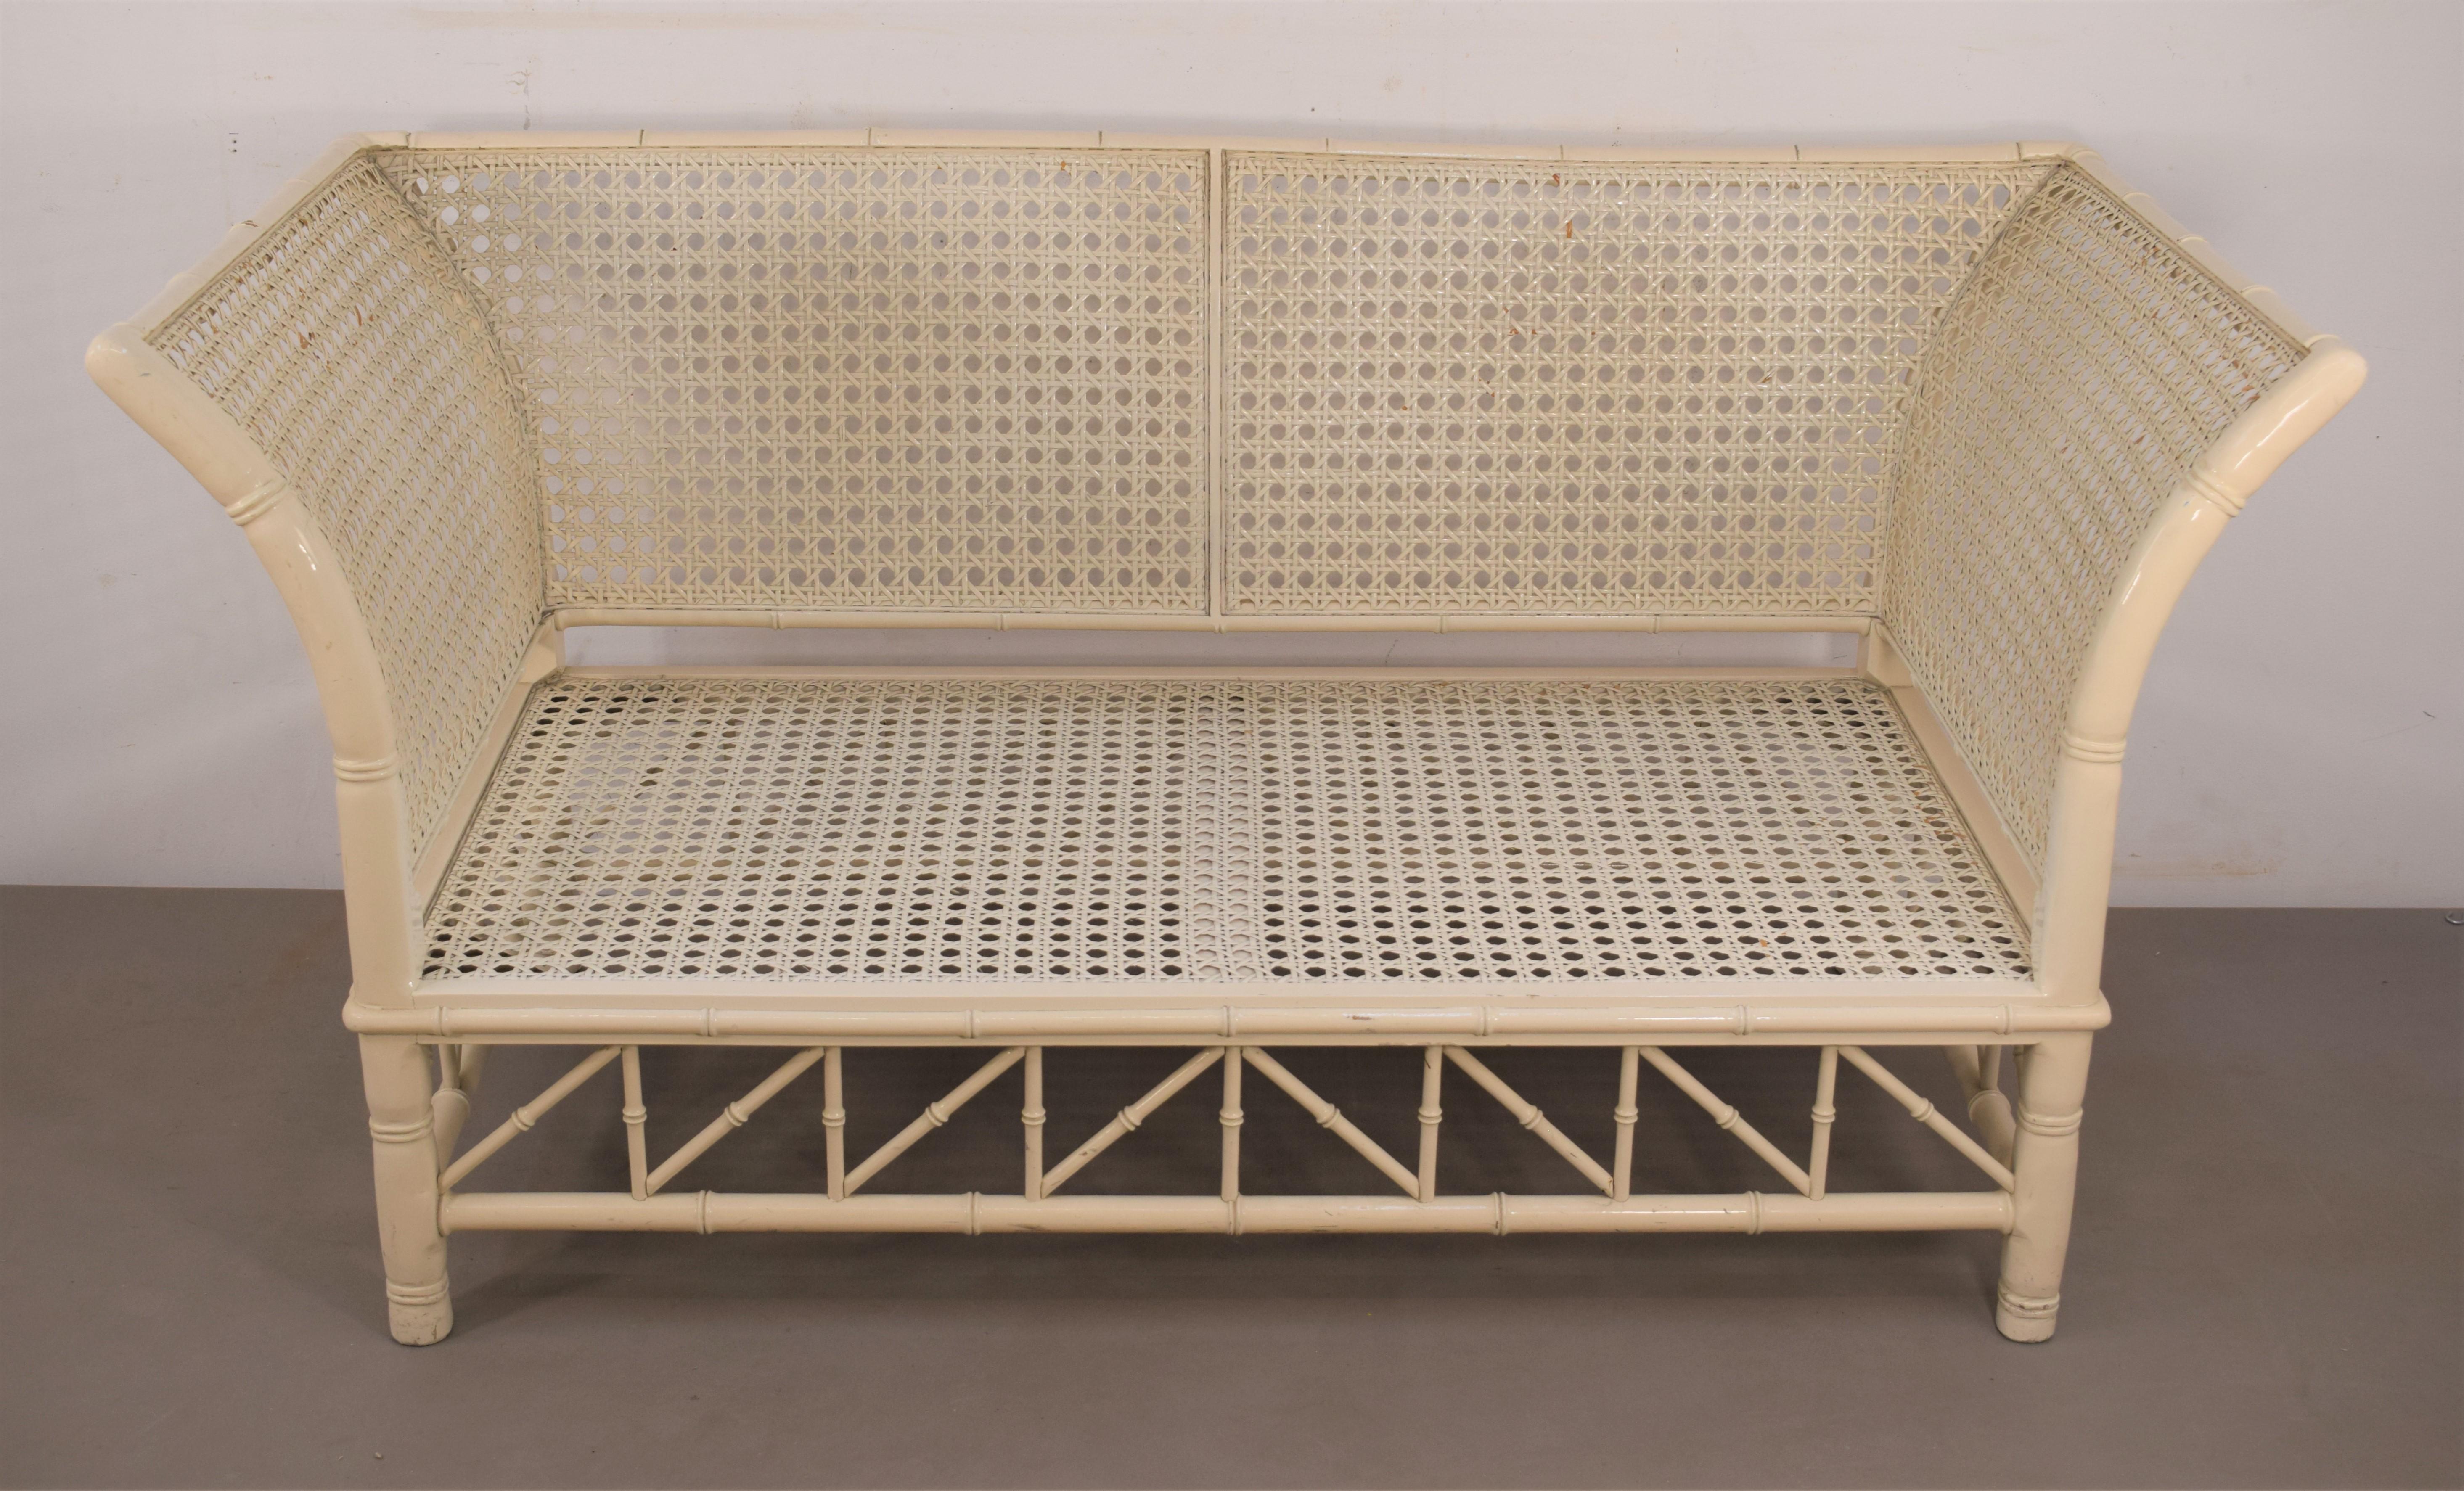 Italian faux bamboo sofa, 1970s.
Dimensions: H=75 cm; W=148 cm; D= 69 cm; seat height= 30 cm.